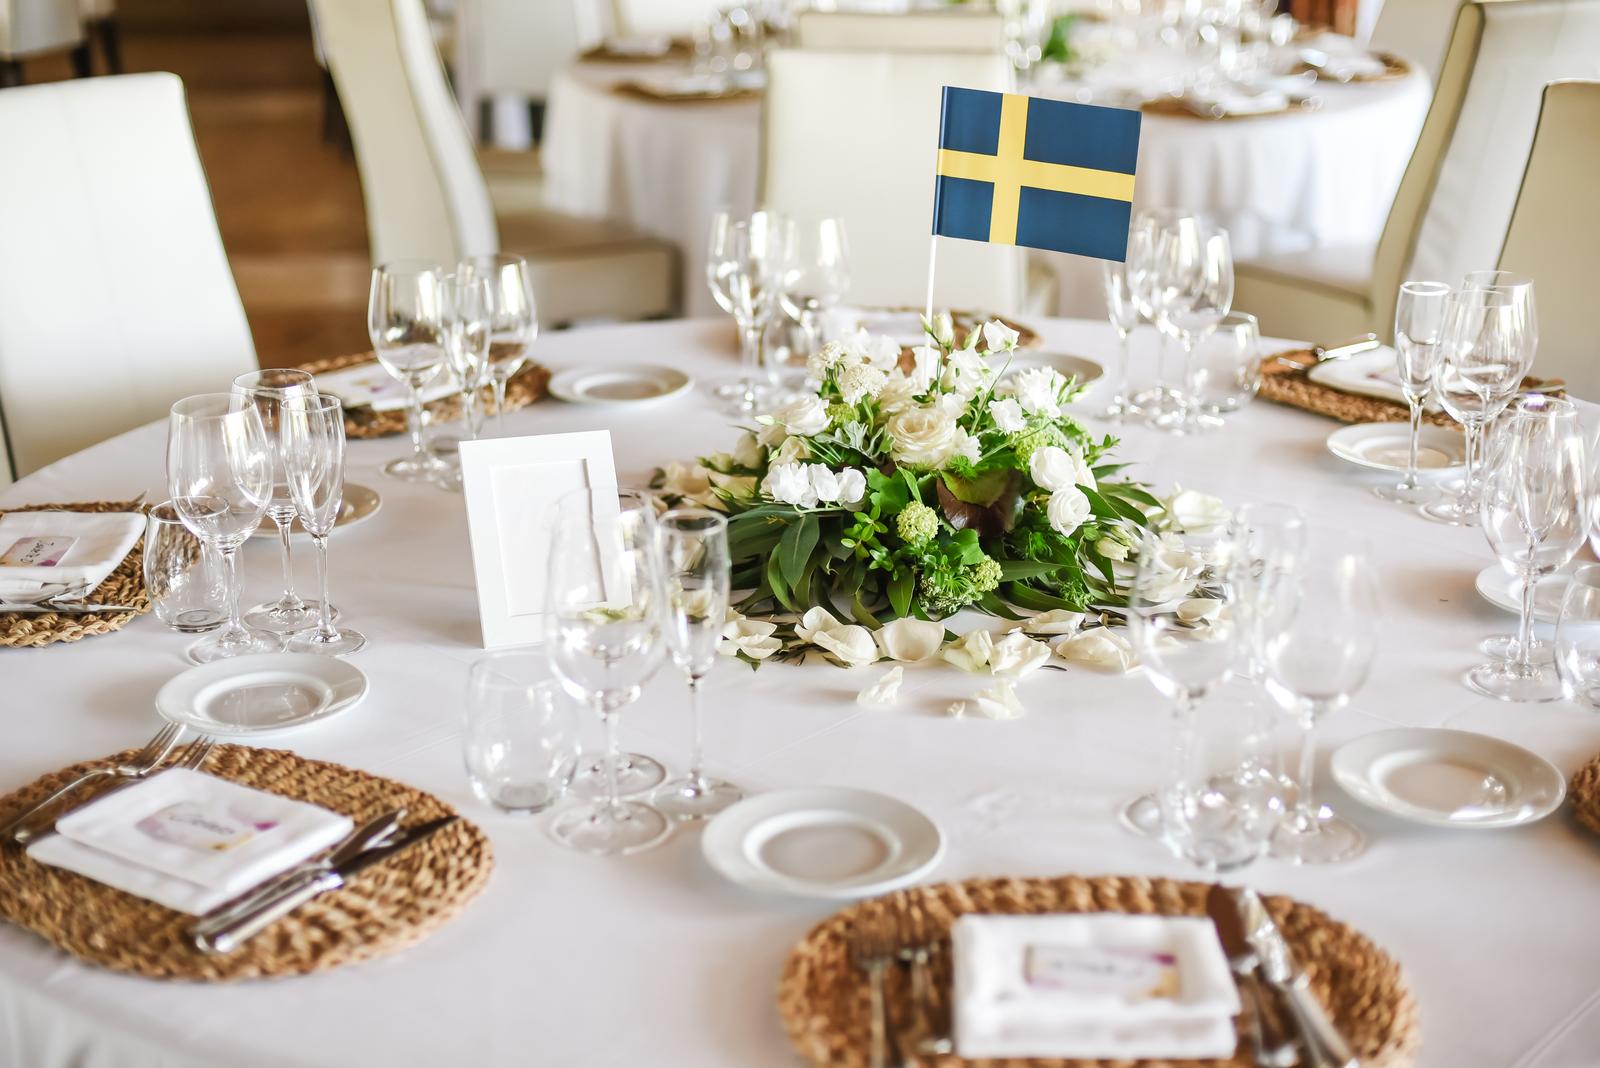 Event catering activities in Tallinn